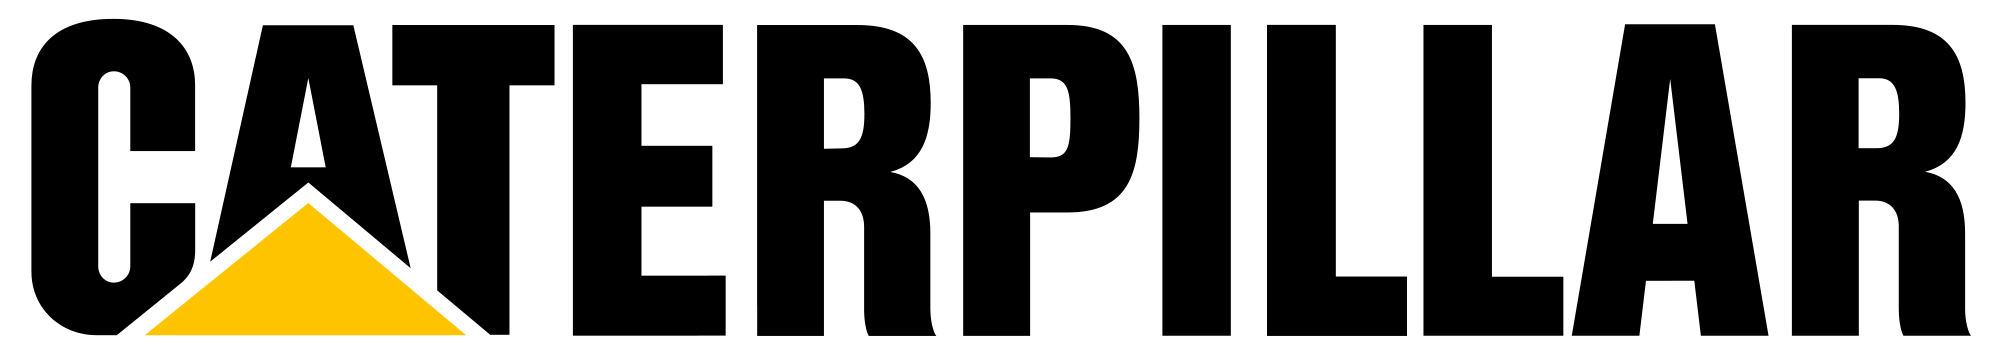 2000px-Caterpillar_logo.svg